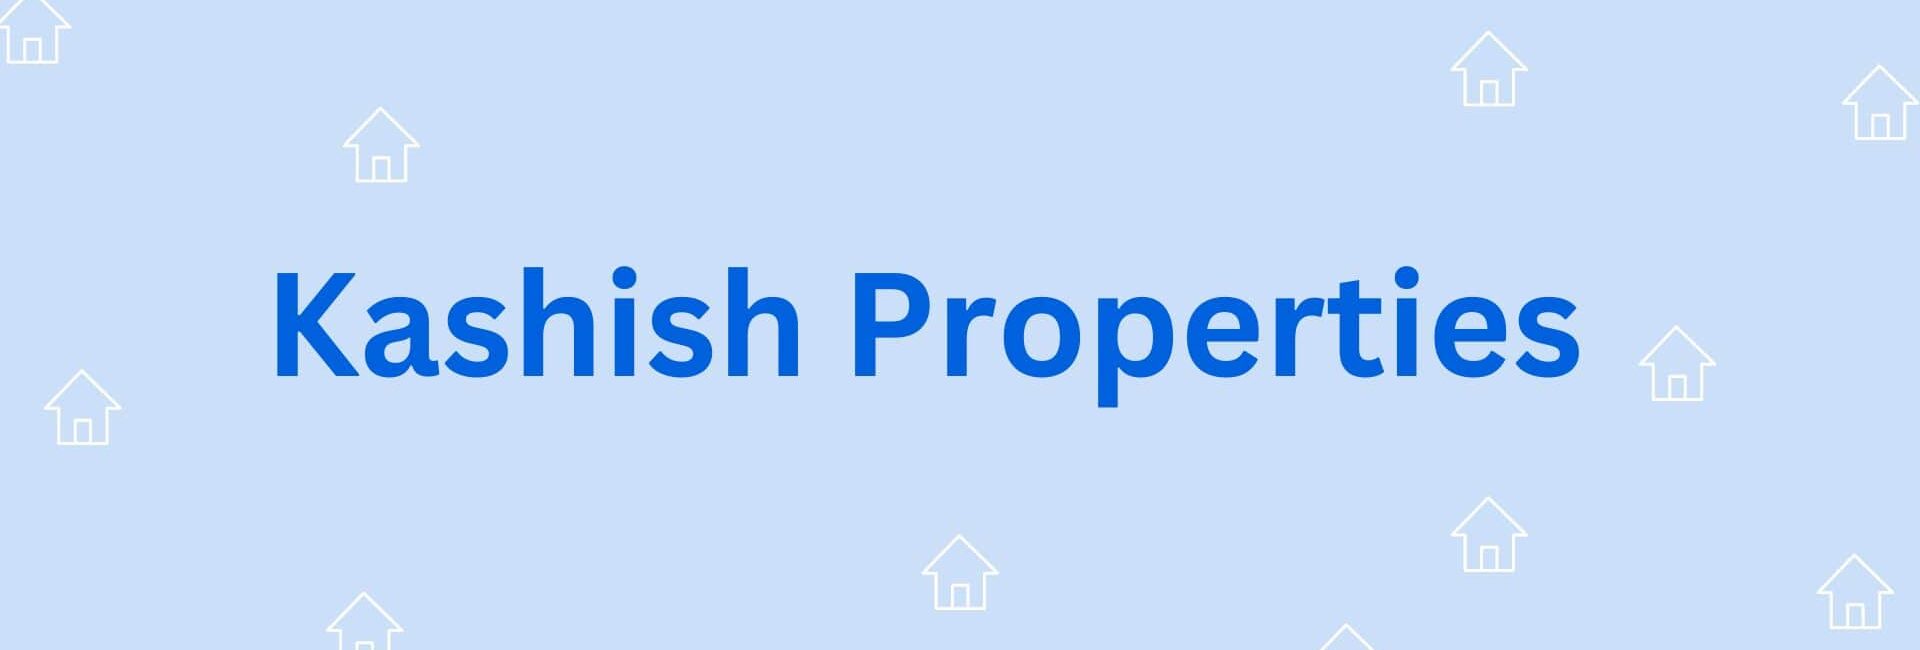 Kashish Properties - Property Dealer in Hisar